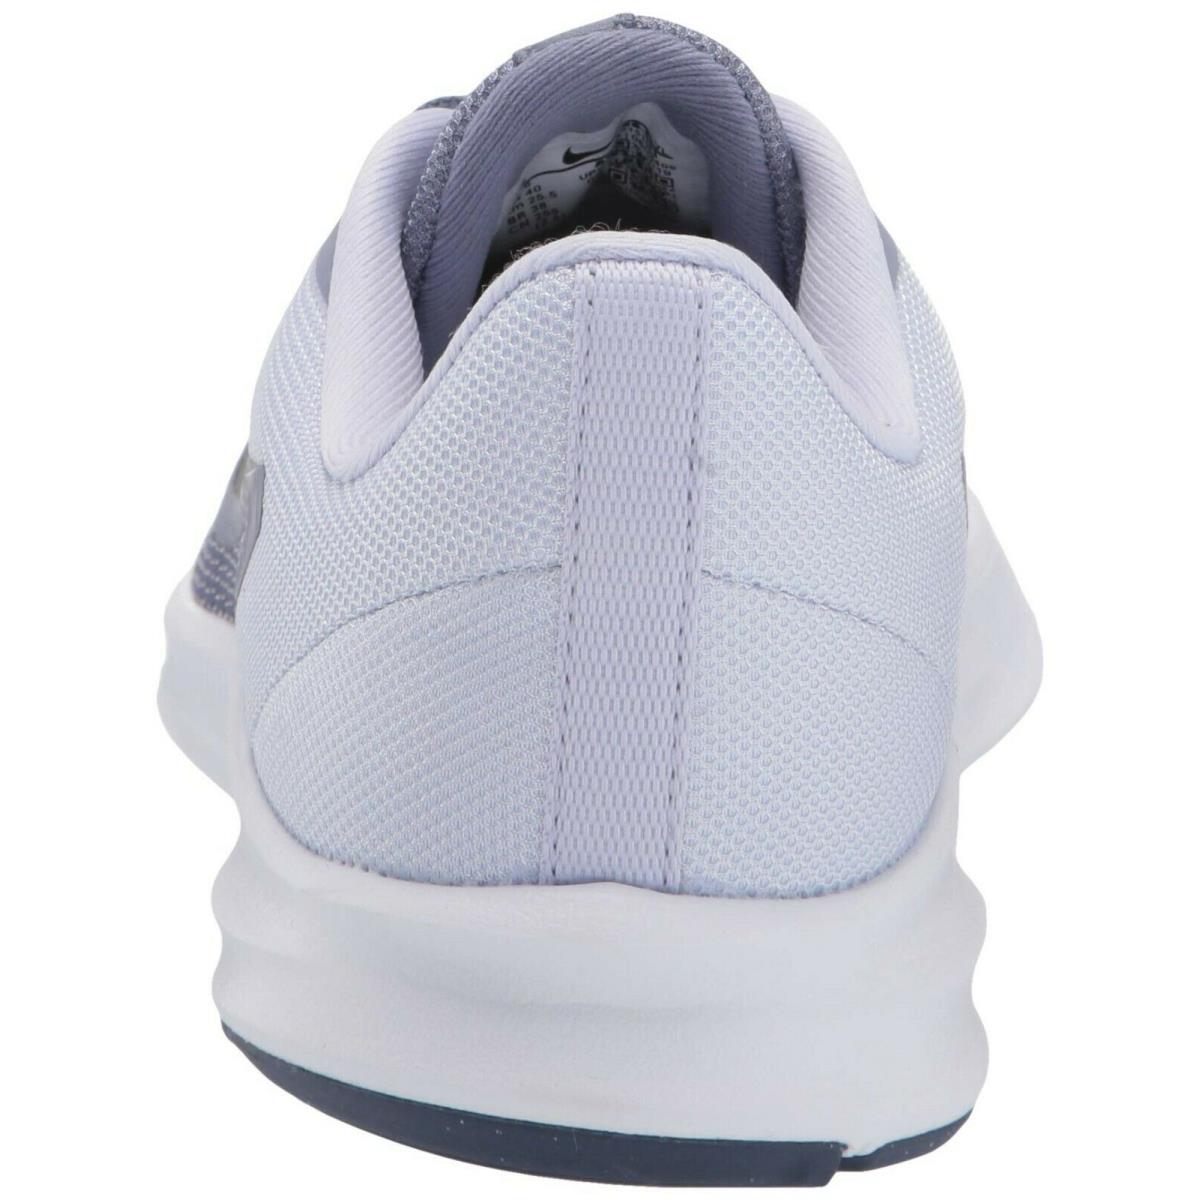 Nike shoes Downshifter - Indigo/Purple 2